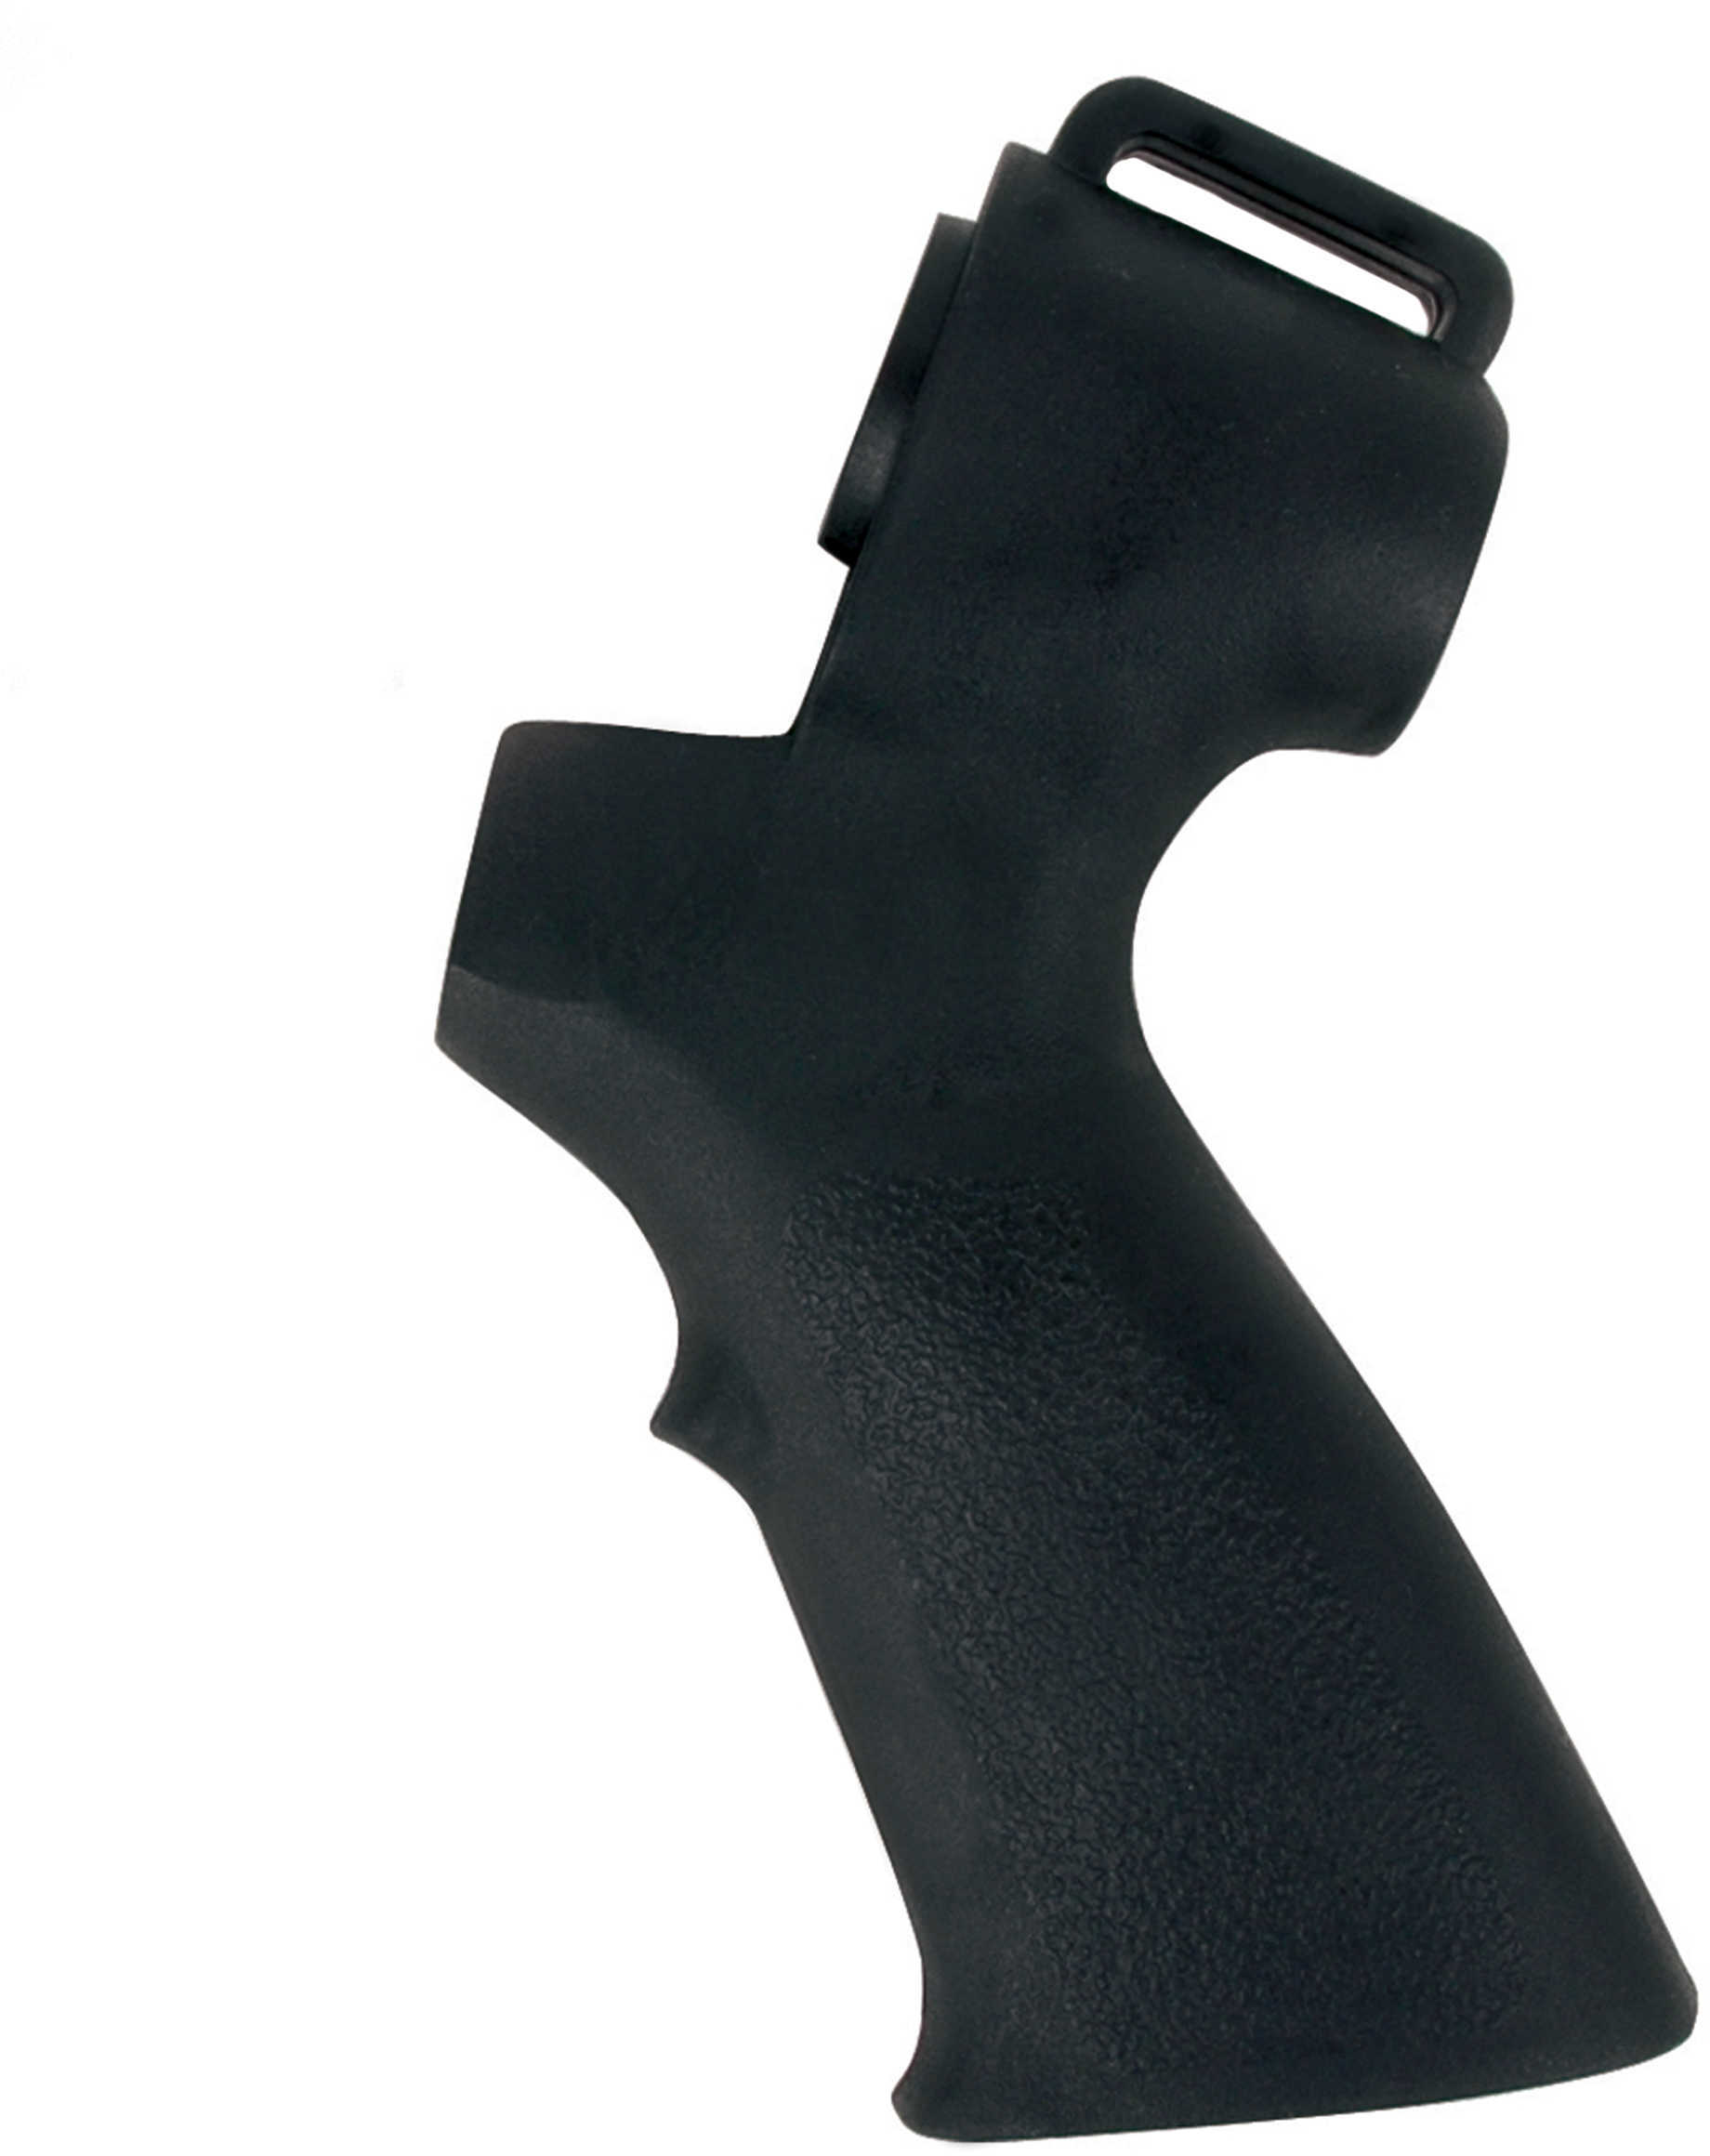 Advanced Technology Intl. Adv. Tech. Pistol Grip Kit For Most PUMPS Black Syn